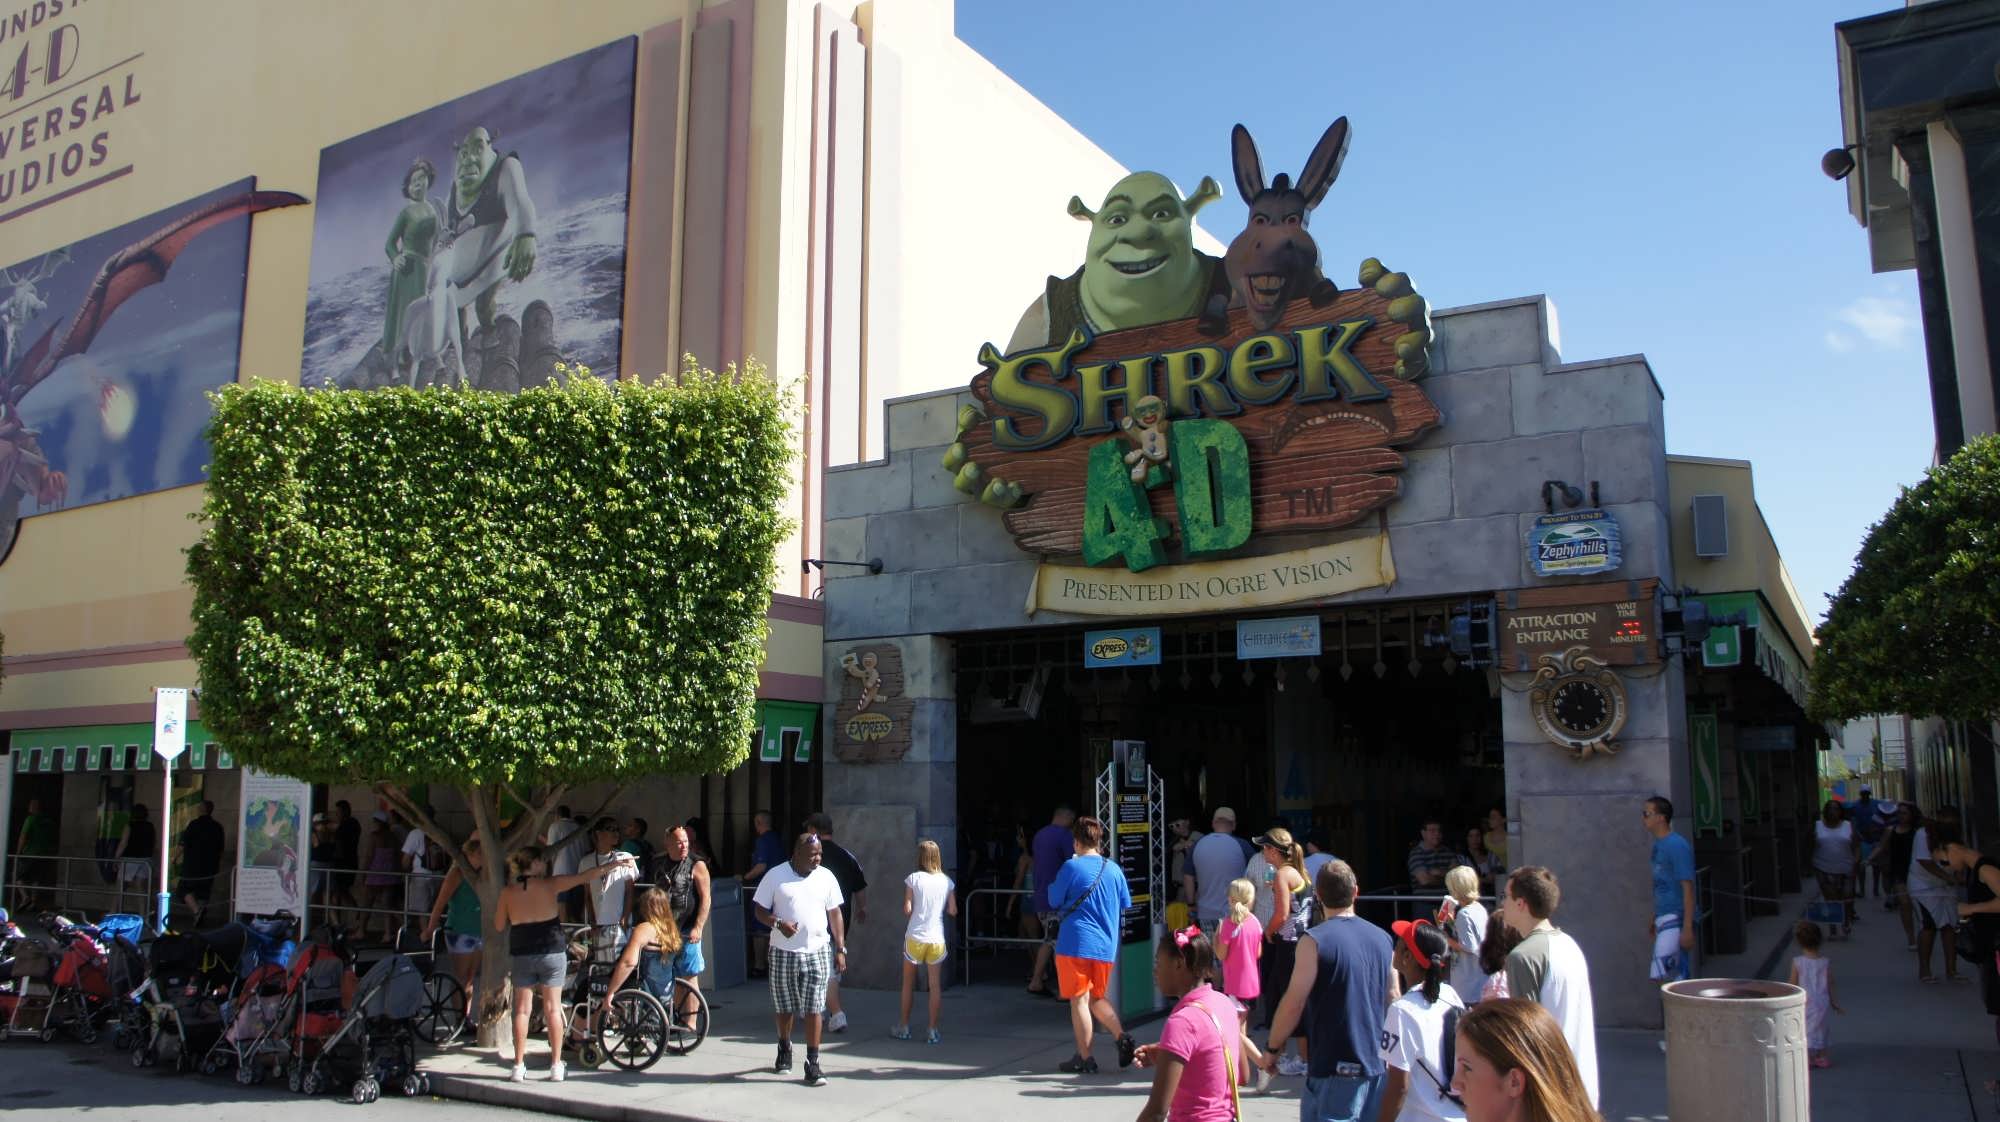 Shrek 4-D: diversión universal 2021 garantizada | PDP Orlando